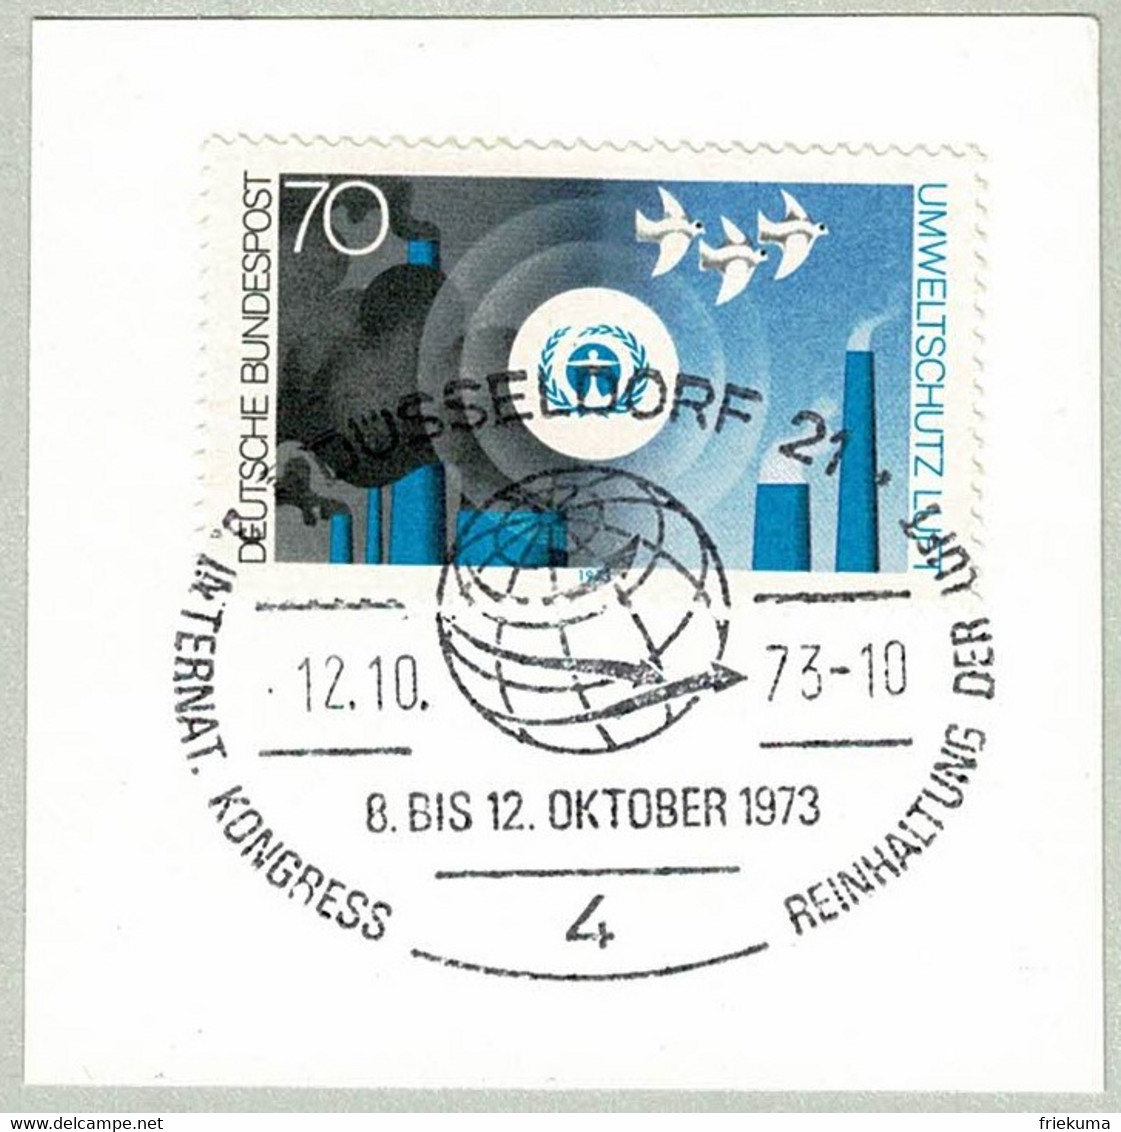 Deutsche Bundespost 1973, Sonderstempel Kongress Reinhaltung Luft Düsseldorf, Propreté / Clean Air - Environment & Climate Protection